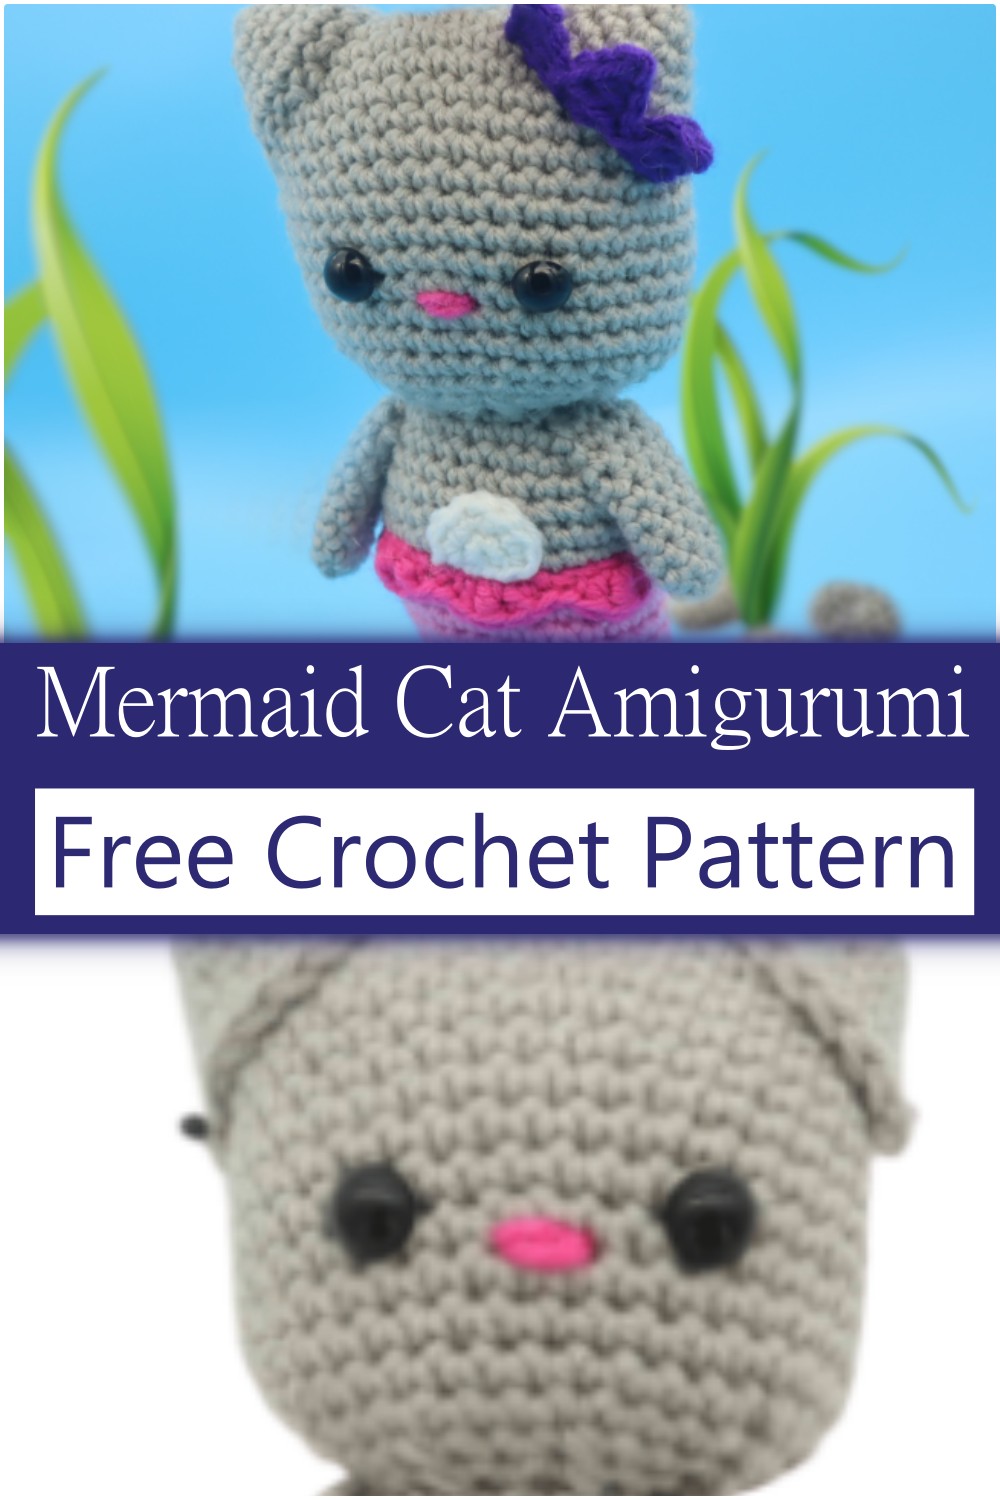 Crochet Cat Pattern With Mermaid Amigurumi Idea